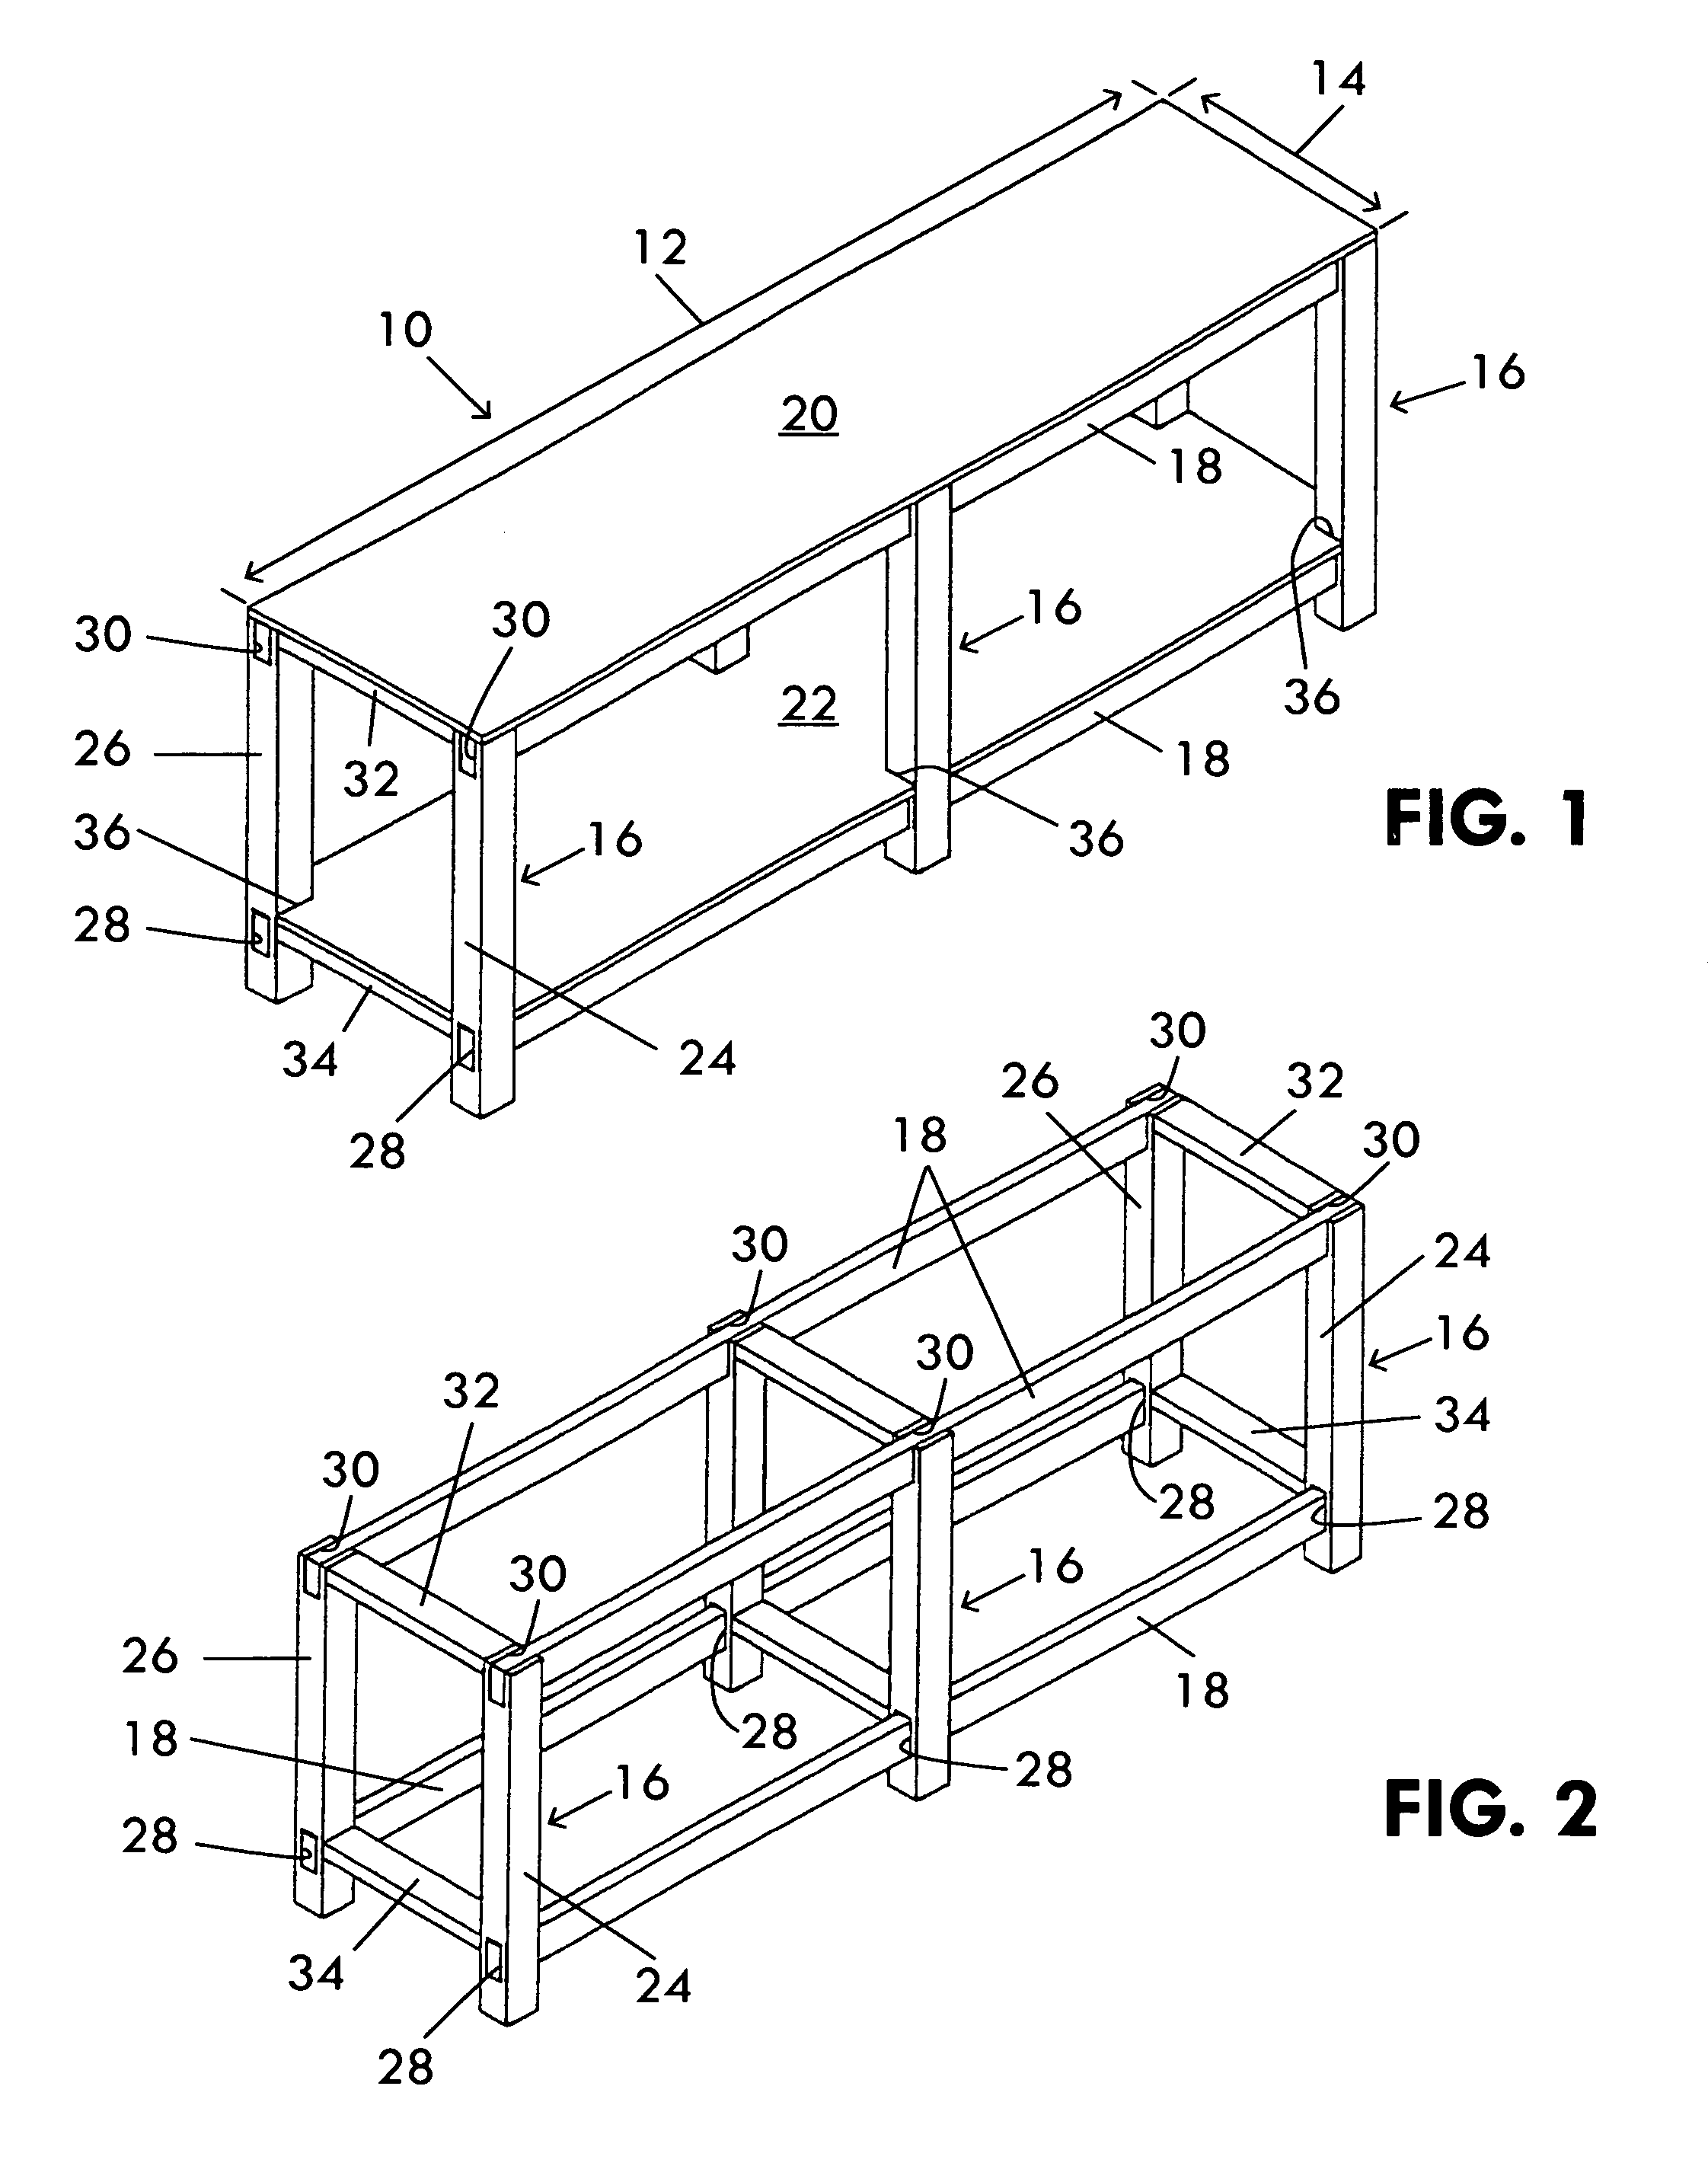 Modular shelving system